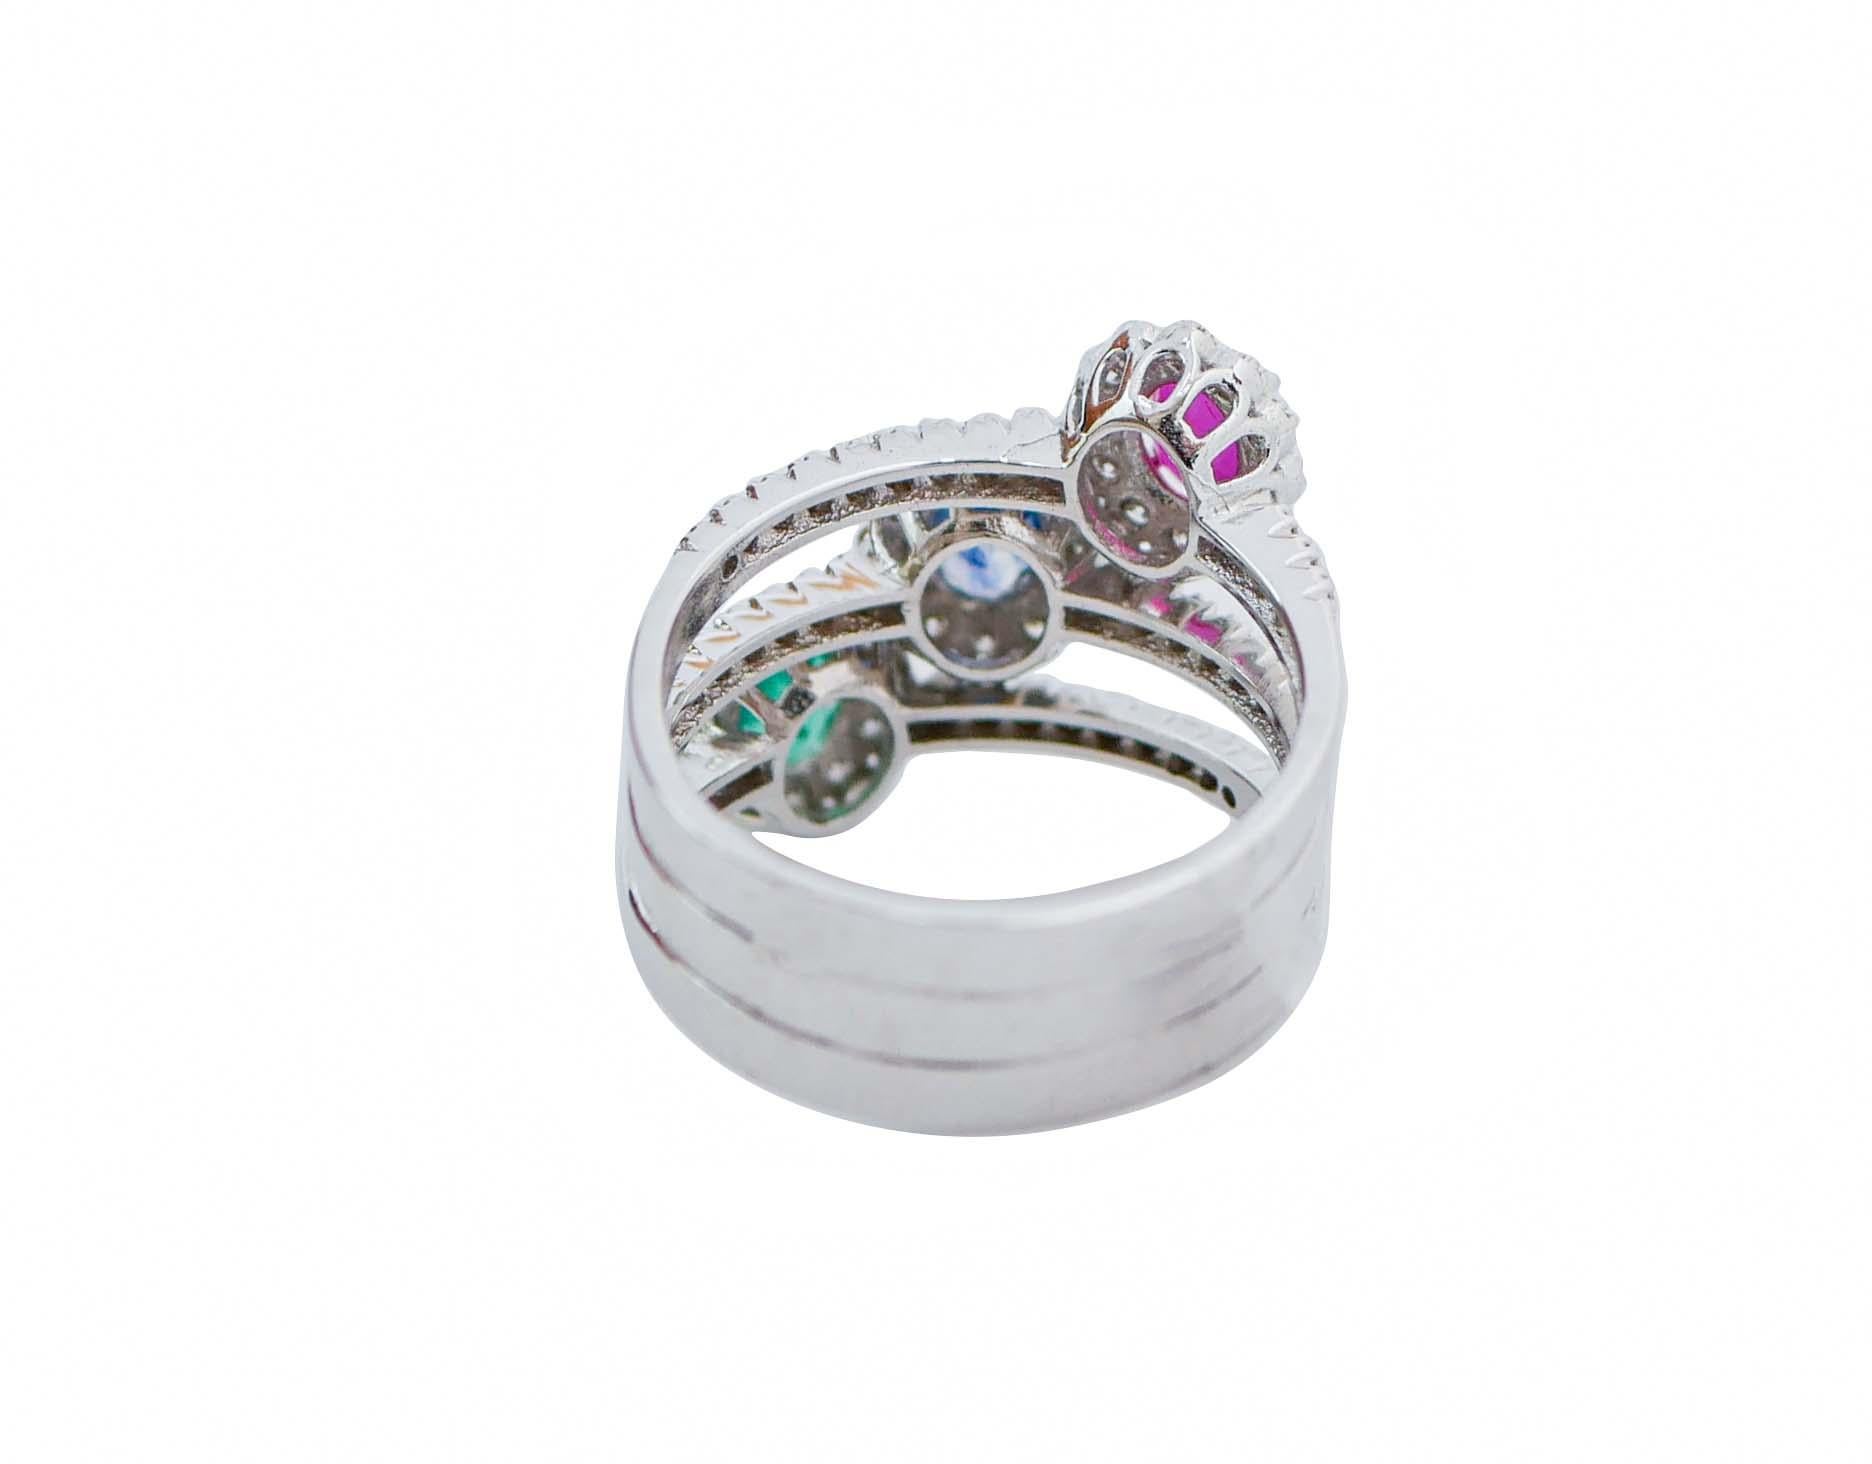 Mixed Cut Ruby, Emerald, Sapphire, Diamonds, 18 Karat White Gold Ring. For Sale